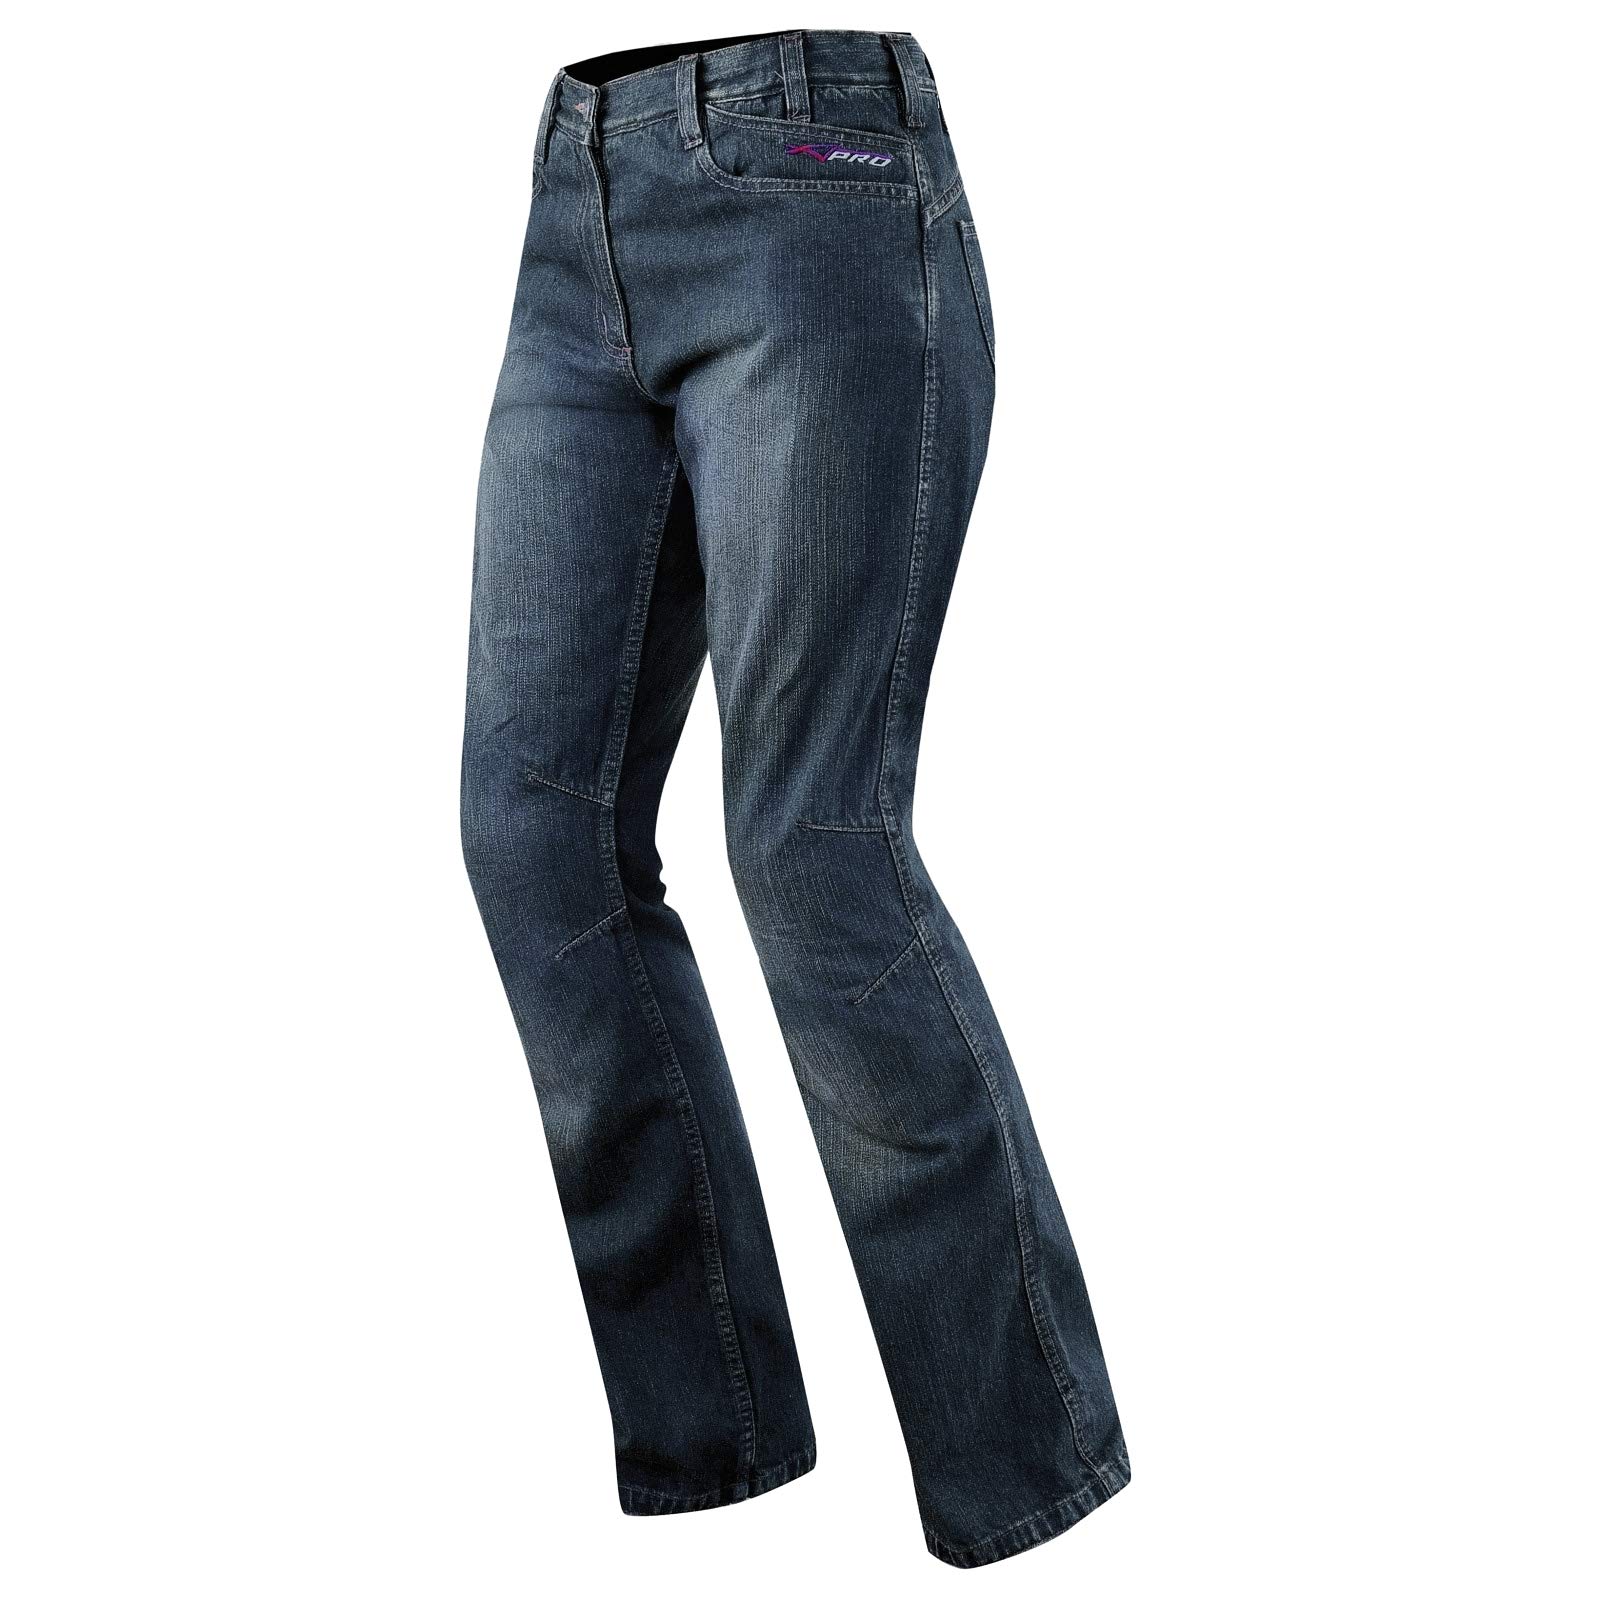 A-Pro Jeans Damen Denim CE Knie Protektoren Motorrad Biker Pants Hose Blau 28 von A-Pro